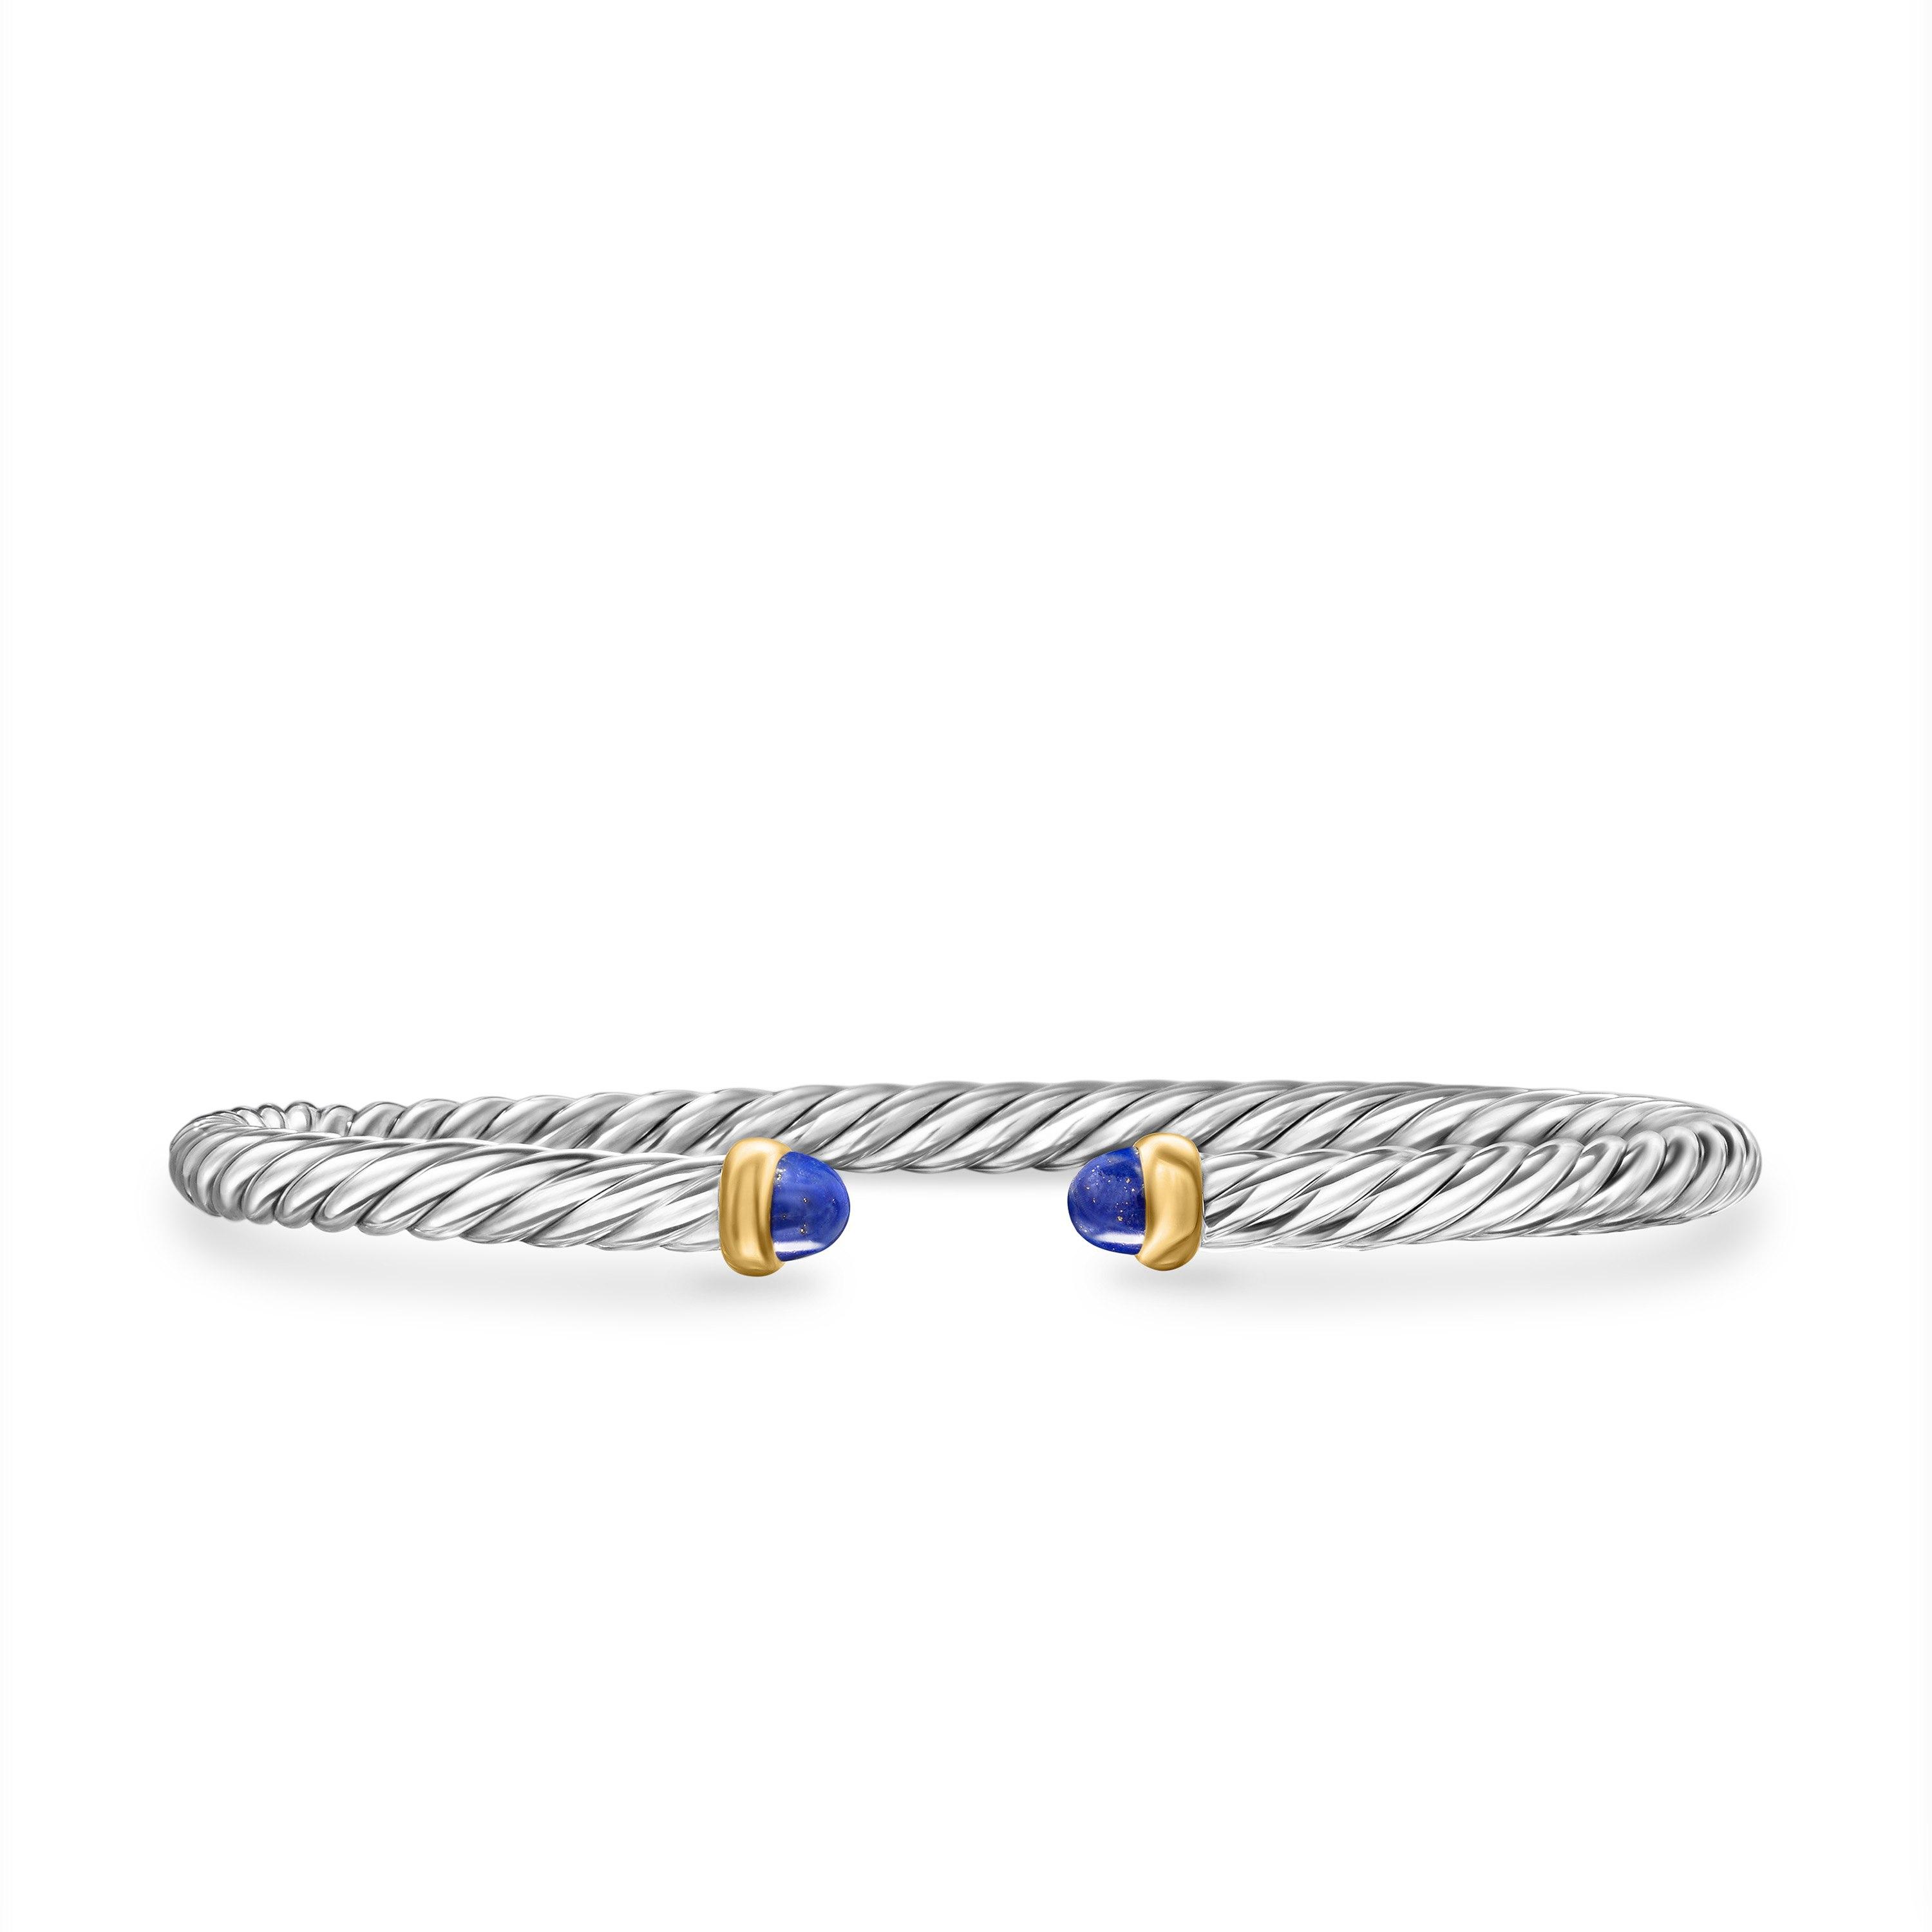 David Yurman Cable Flex Sterling Silver Bracelet with Lapis, Size Medium 0